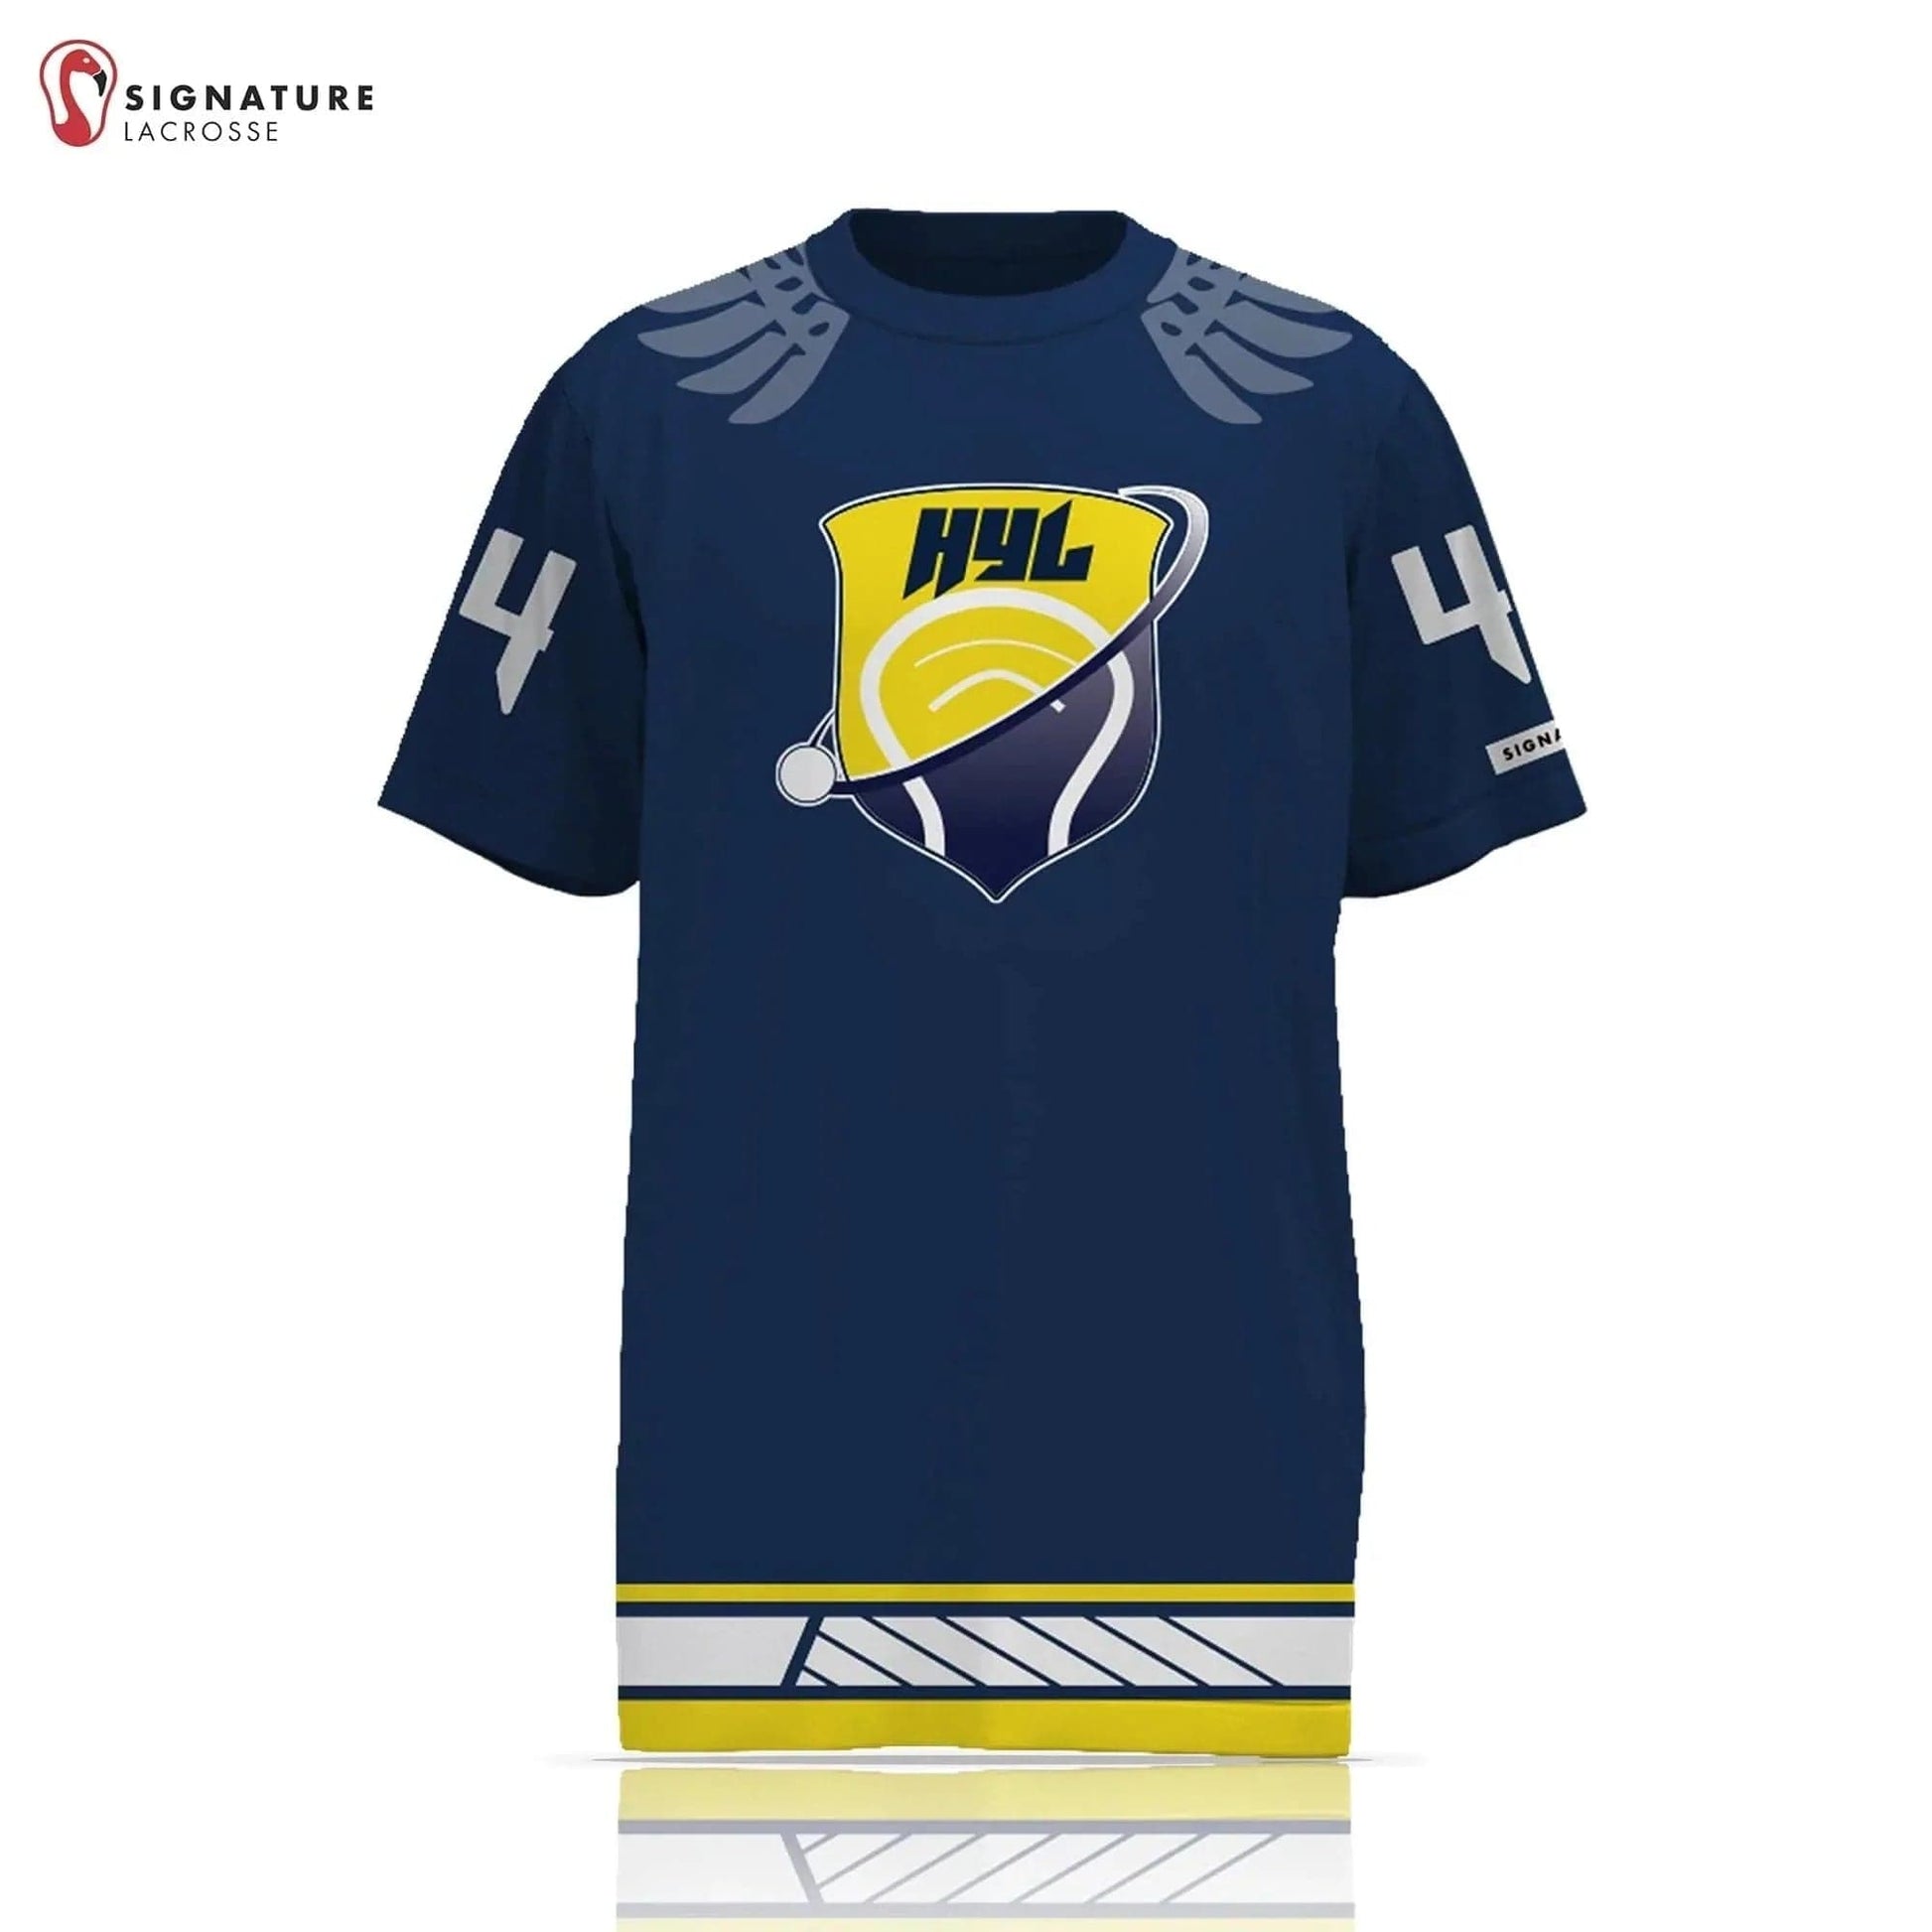 Hudsonville Area Lacrosse Player Short Sleeve Shooting Shirt: 2037 Signature Lacrosse